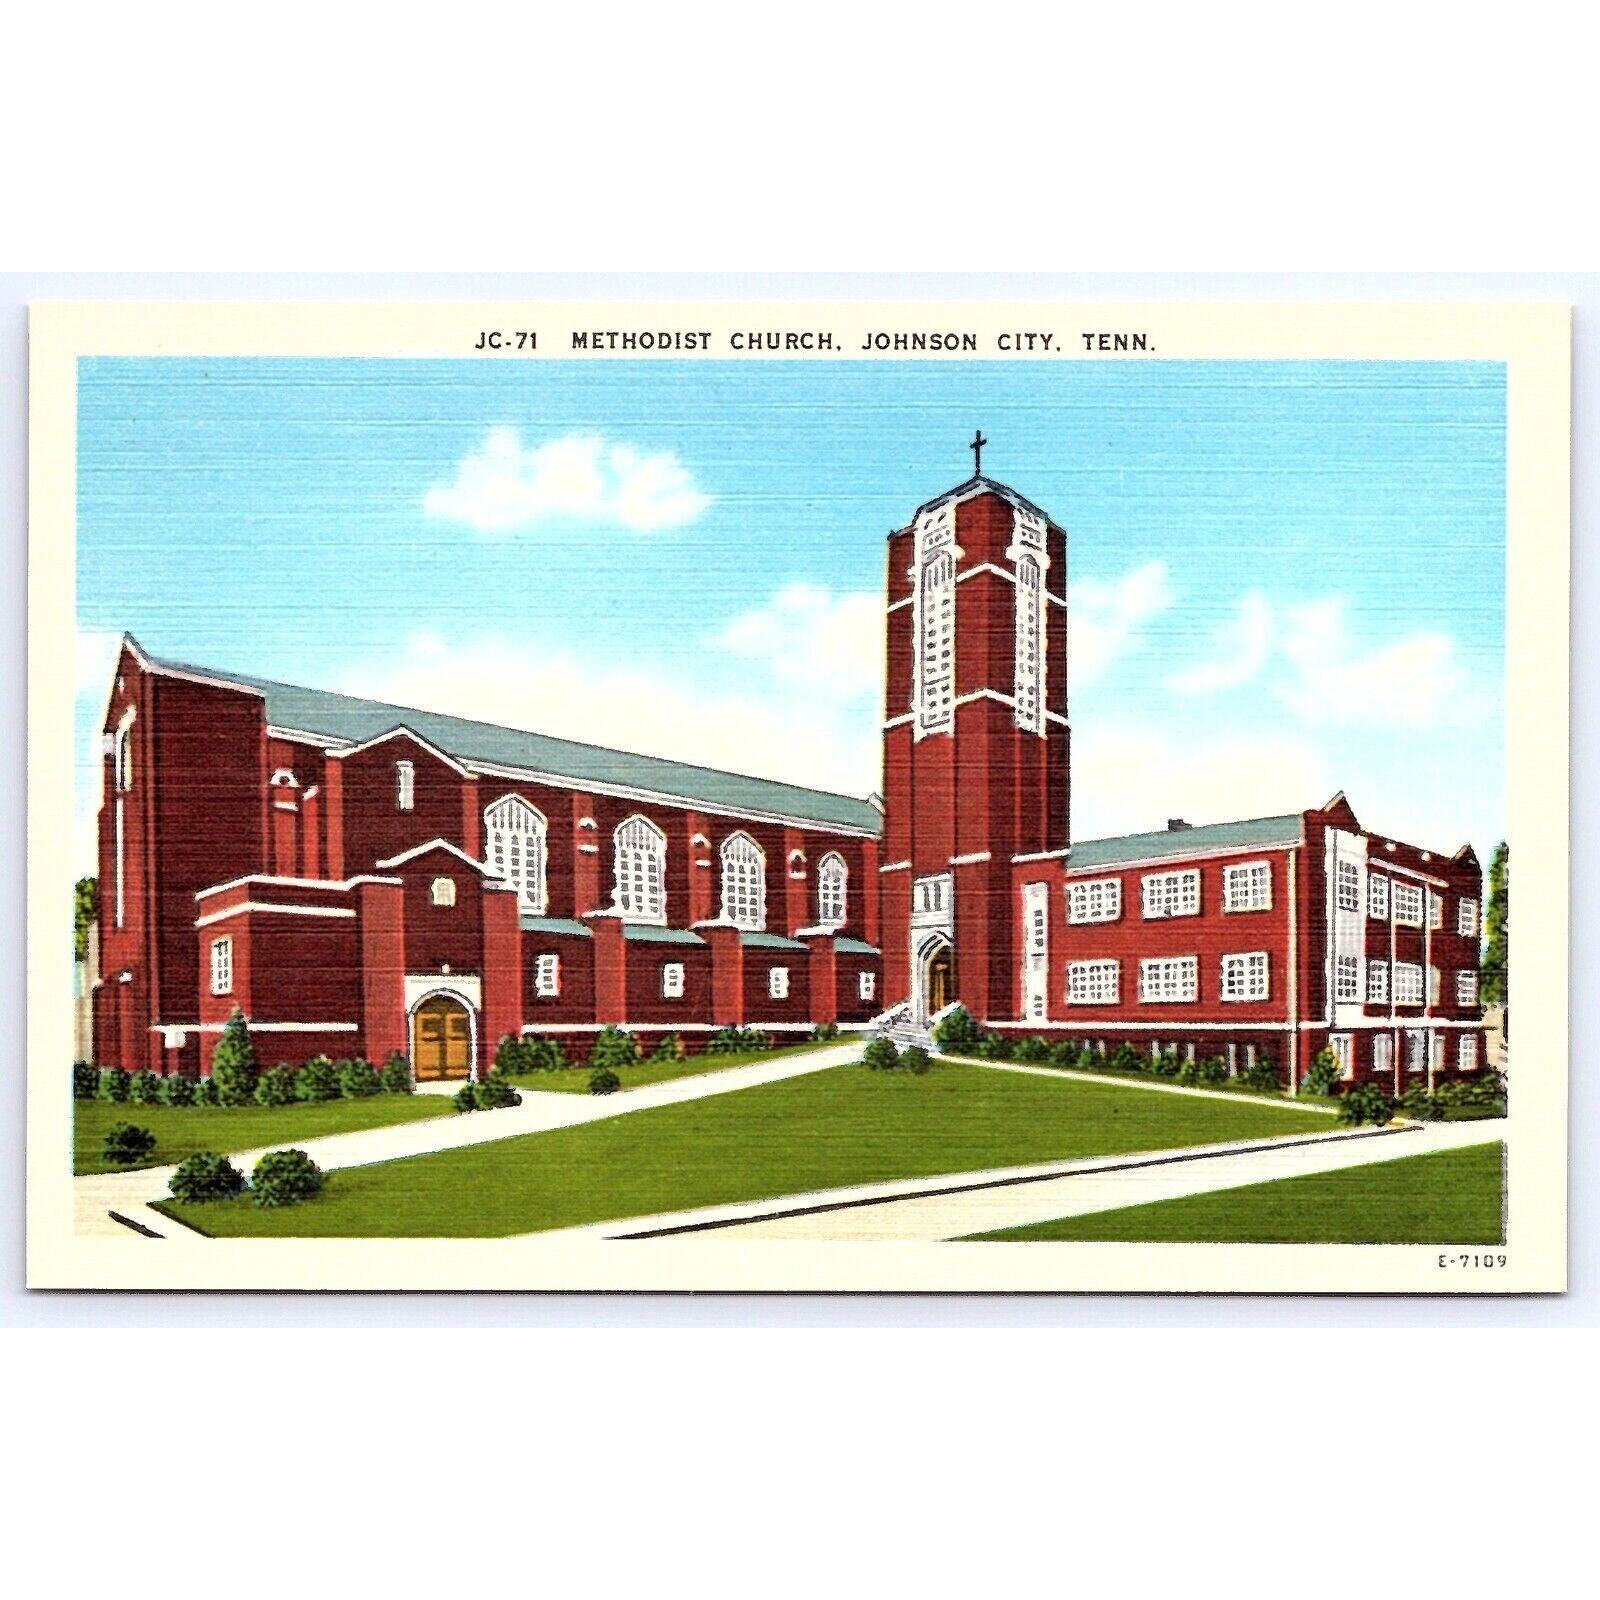 Methodist Church Johnson City Tennessee JC-71 E-7109 VTG Linen Postcard 01033